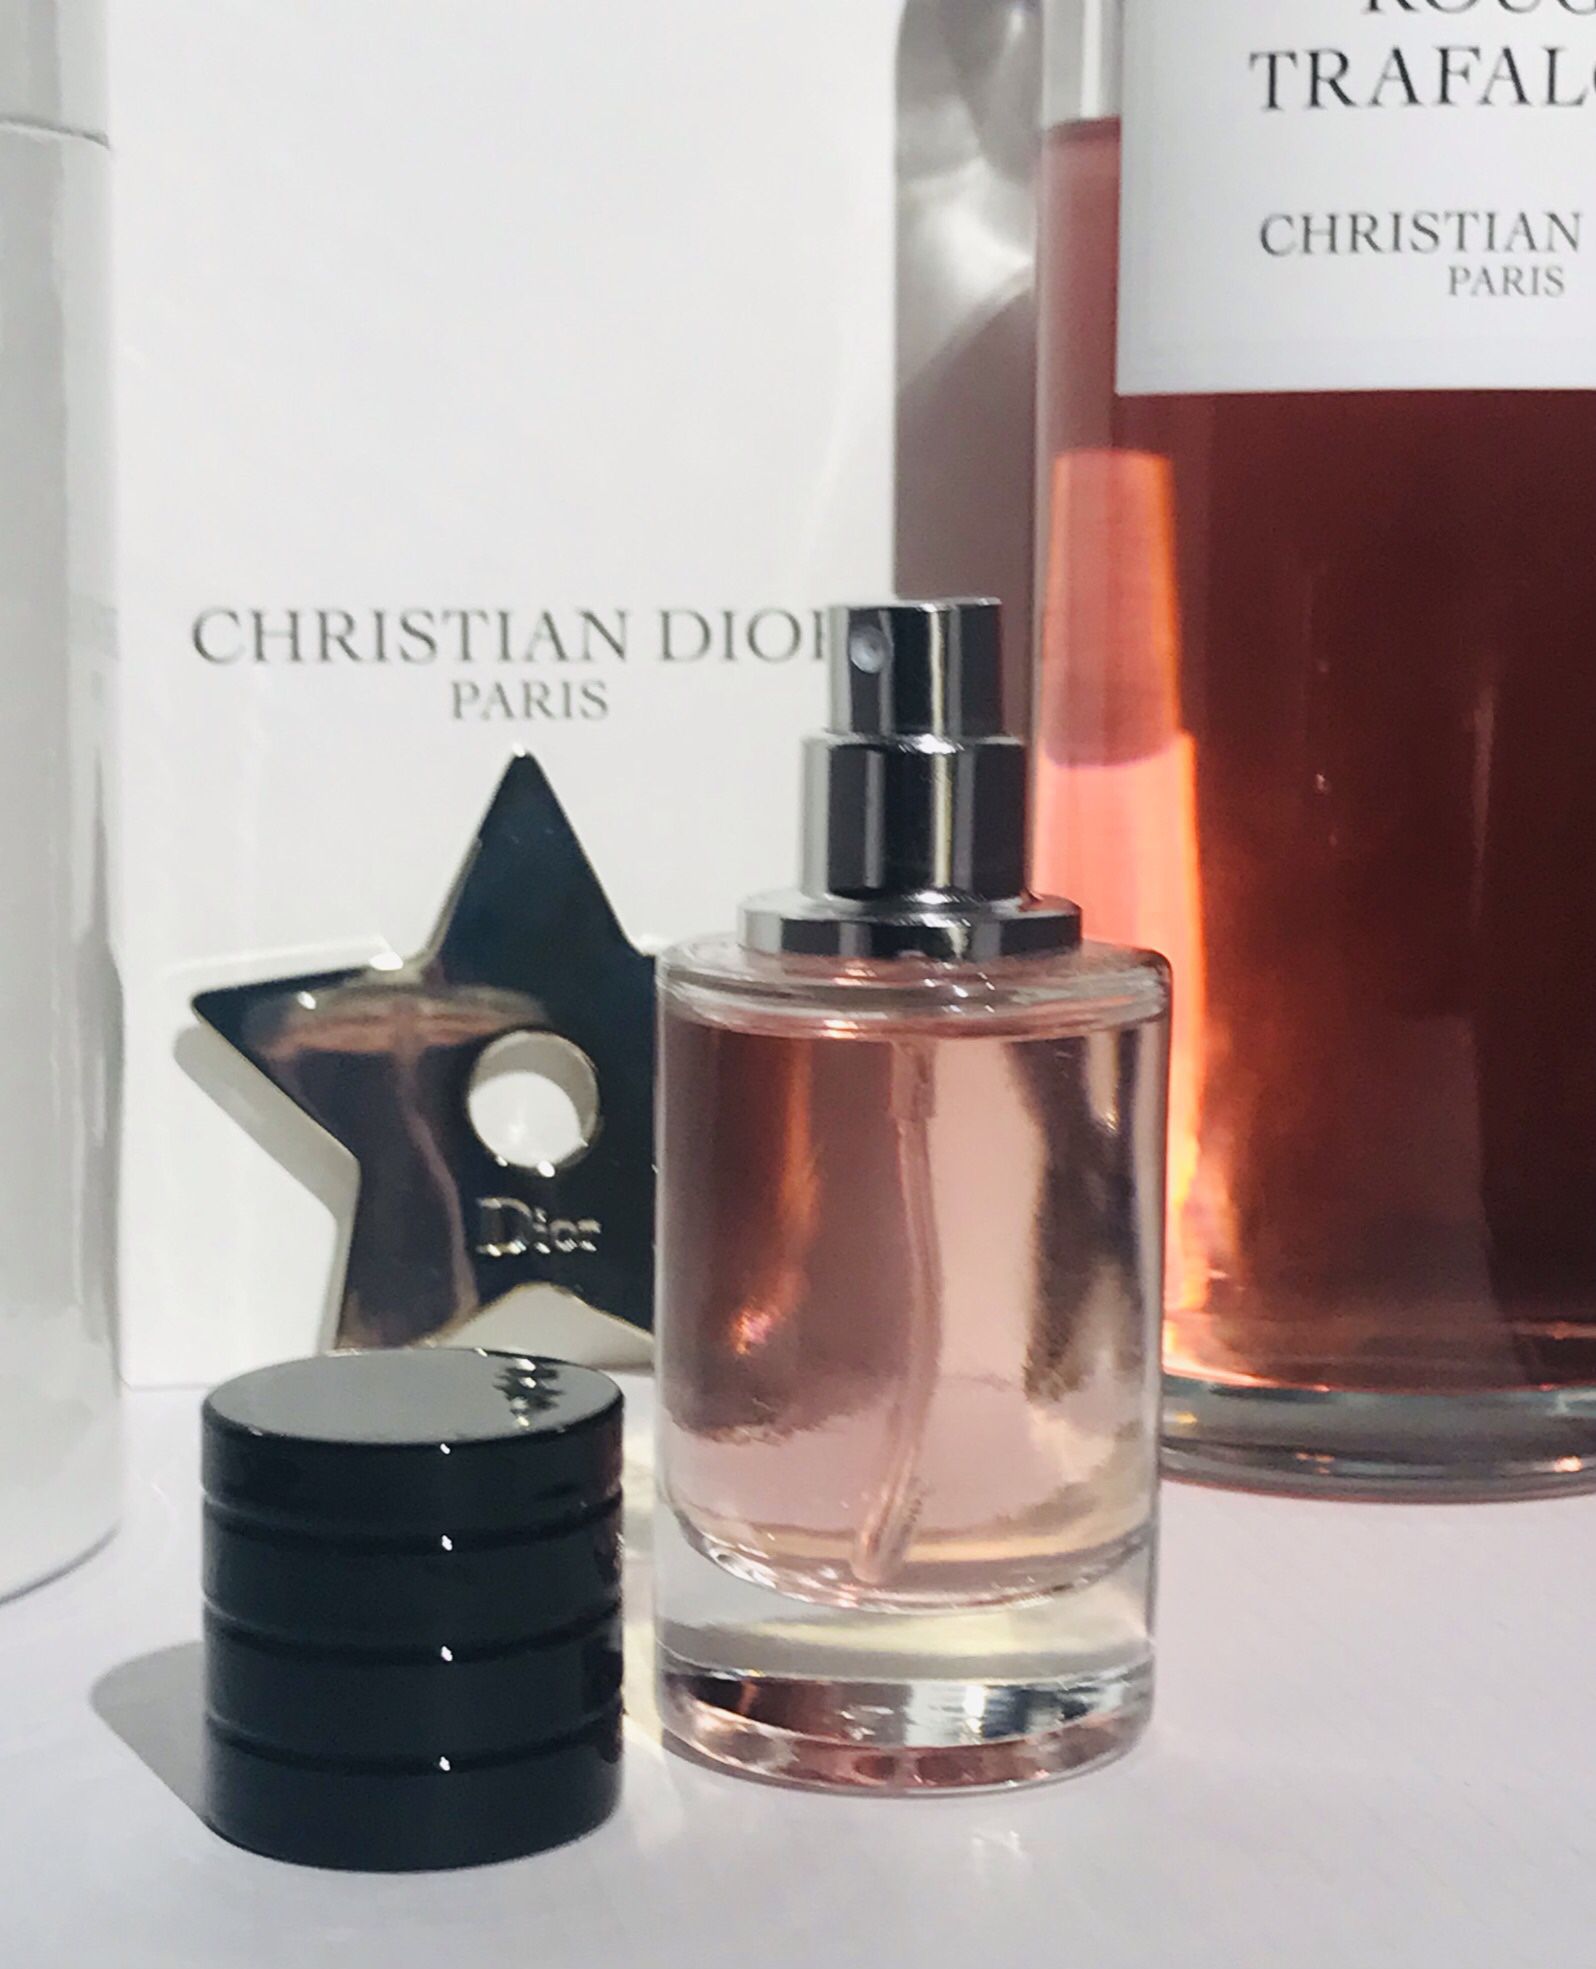 Rouge Trafalgar by Christian Dior 30ml 1oz Edp Parfum Spray Tart Fruity Floral RASBERRY